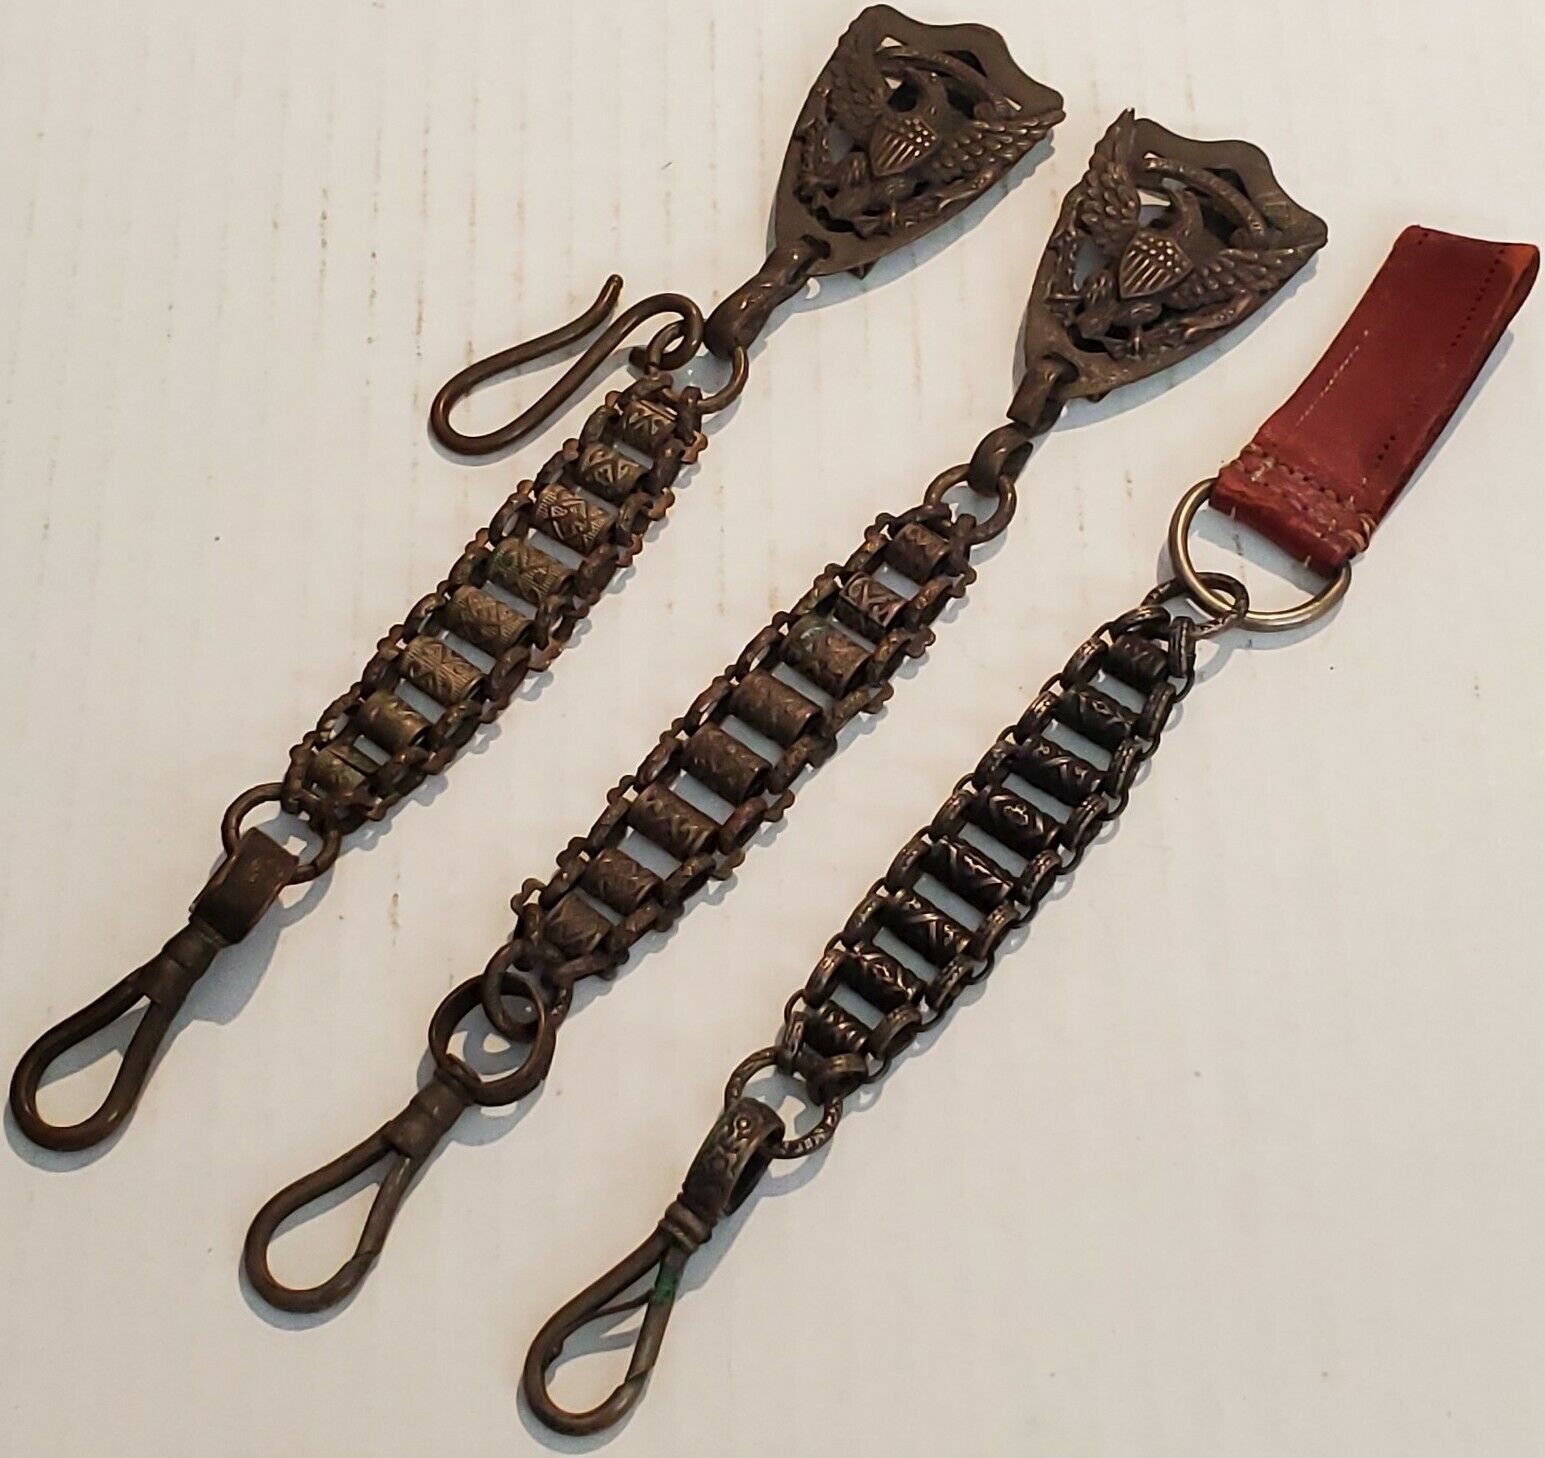 Antique Masonic, Military Antique Belt Sword Clips & Chains E PLURIBUS UN UM